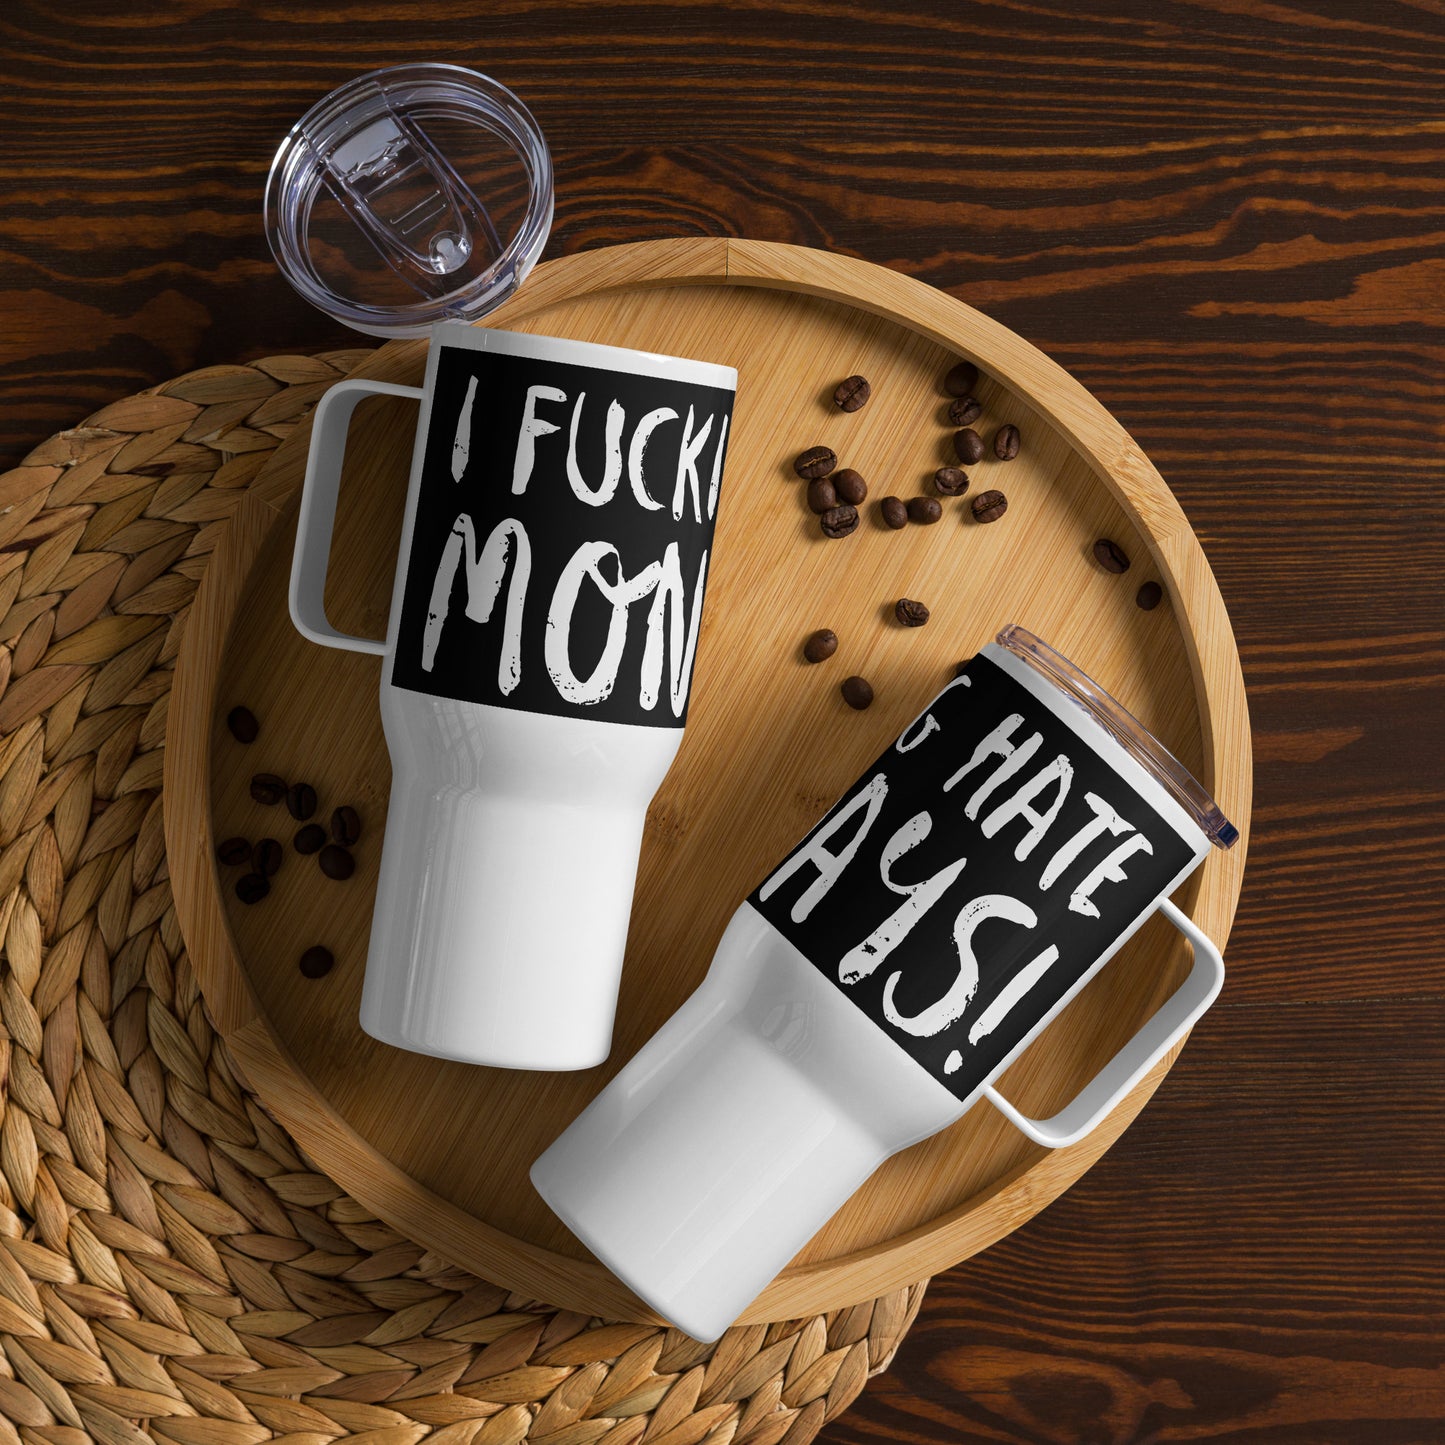 "I hate mondays" thermos mug 739ml